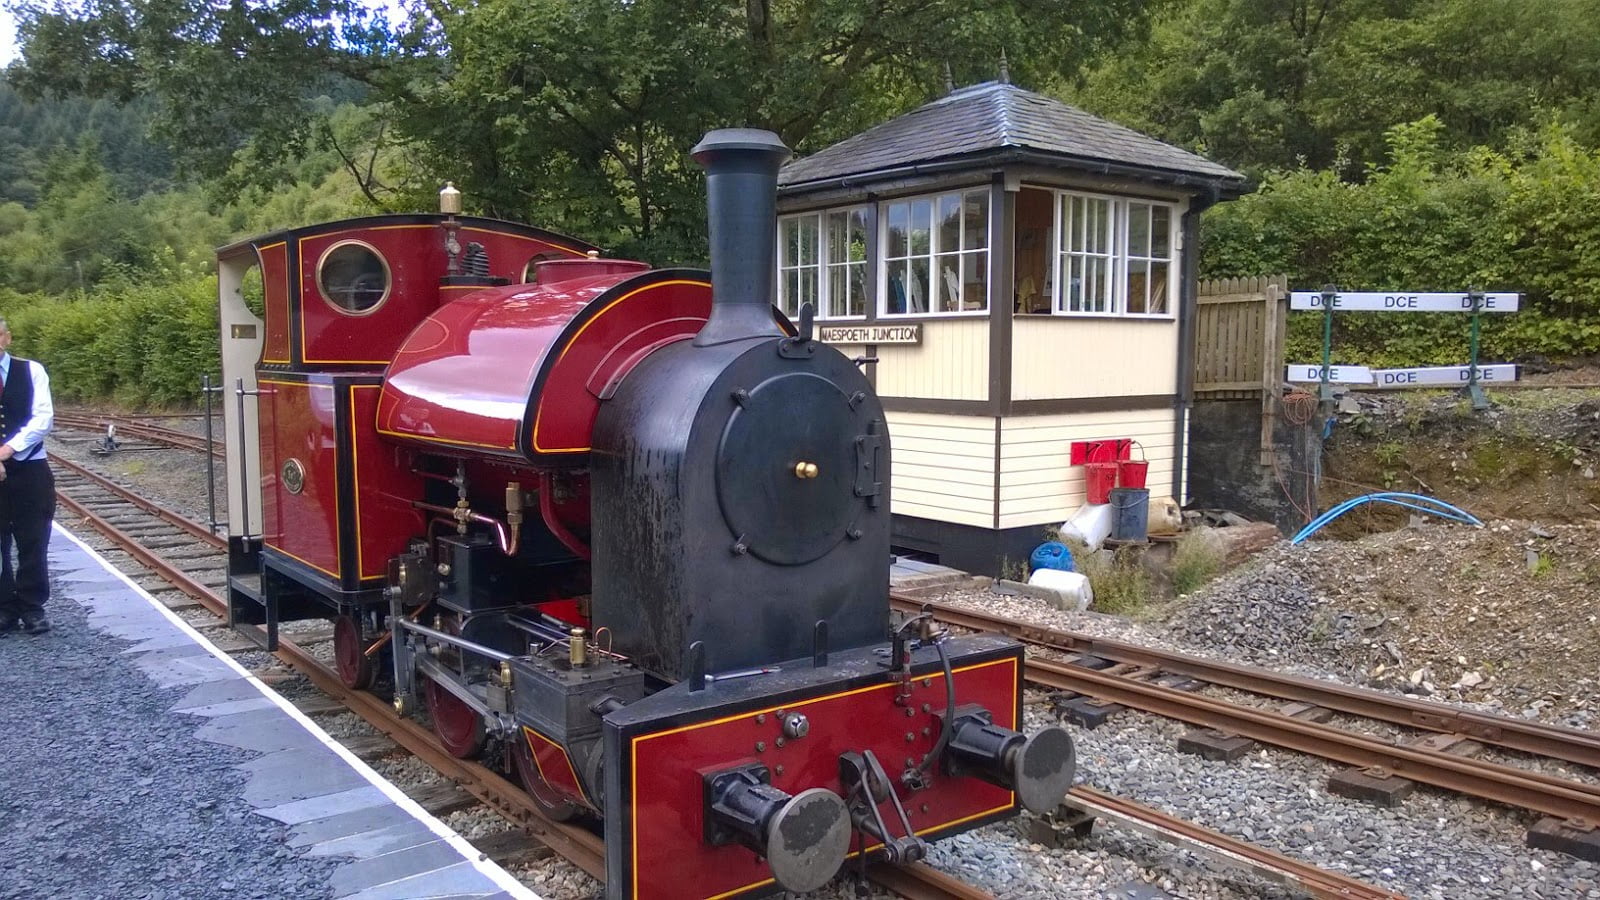 Corris Railway Steam Engine No 7 at Maespoeth